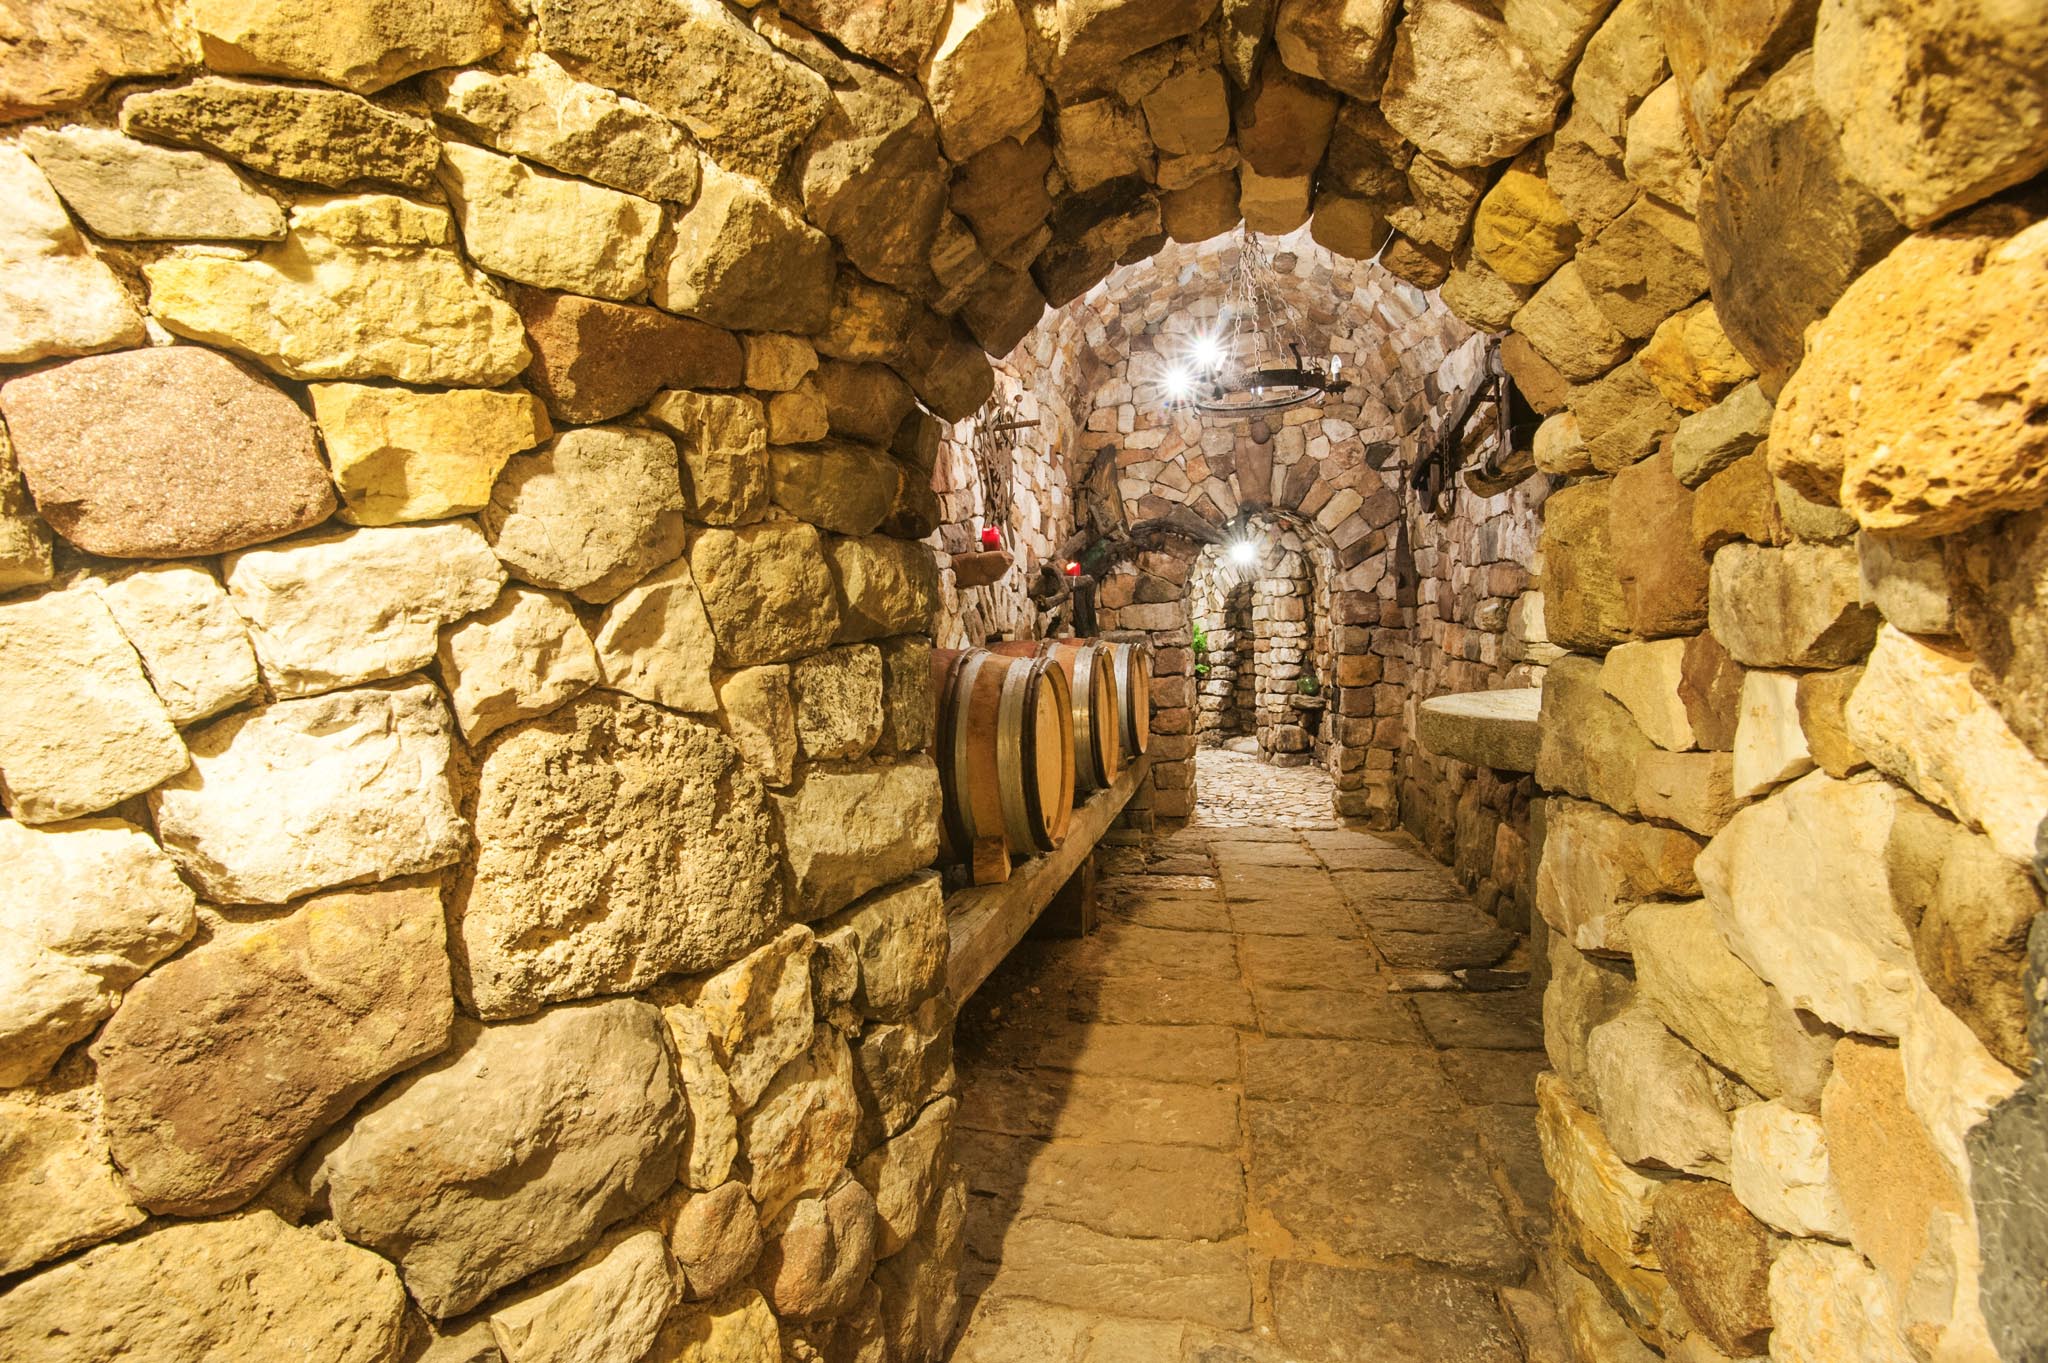 Dominikus cellar in Kaltern: Once underworld and back!